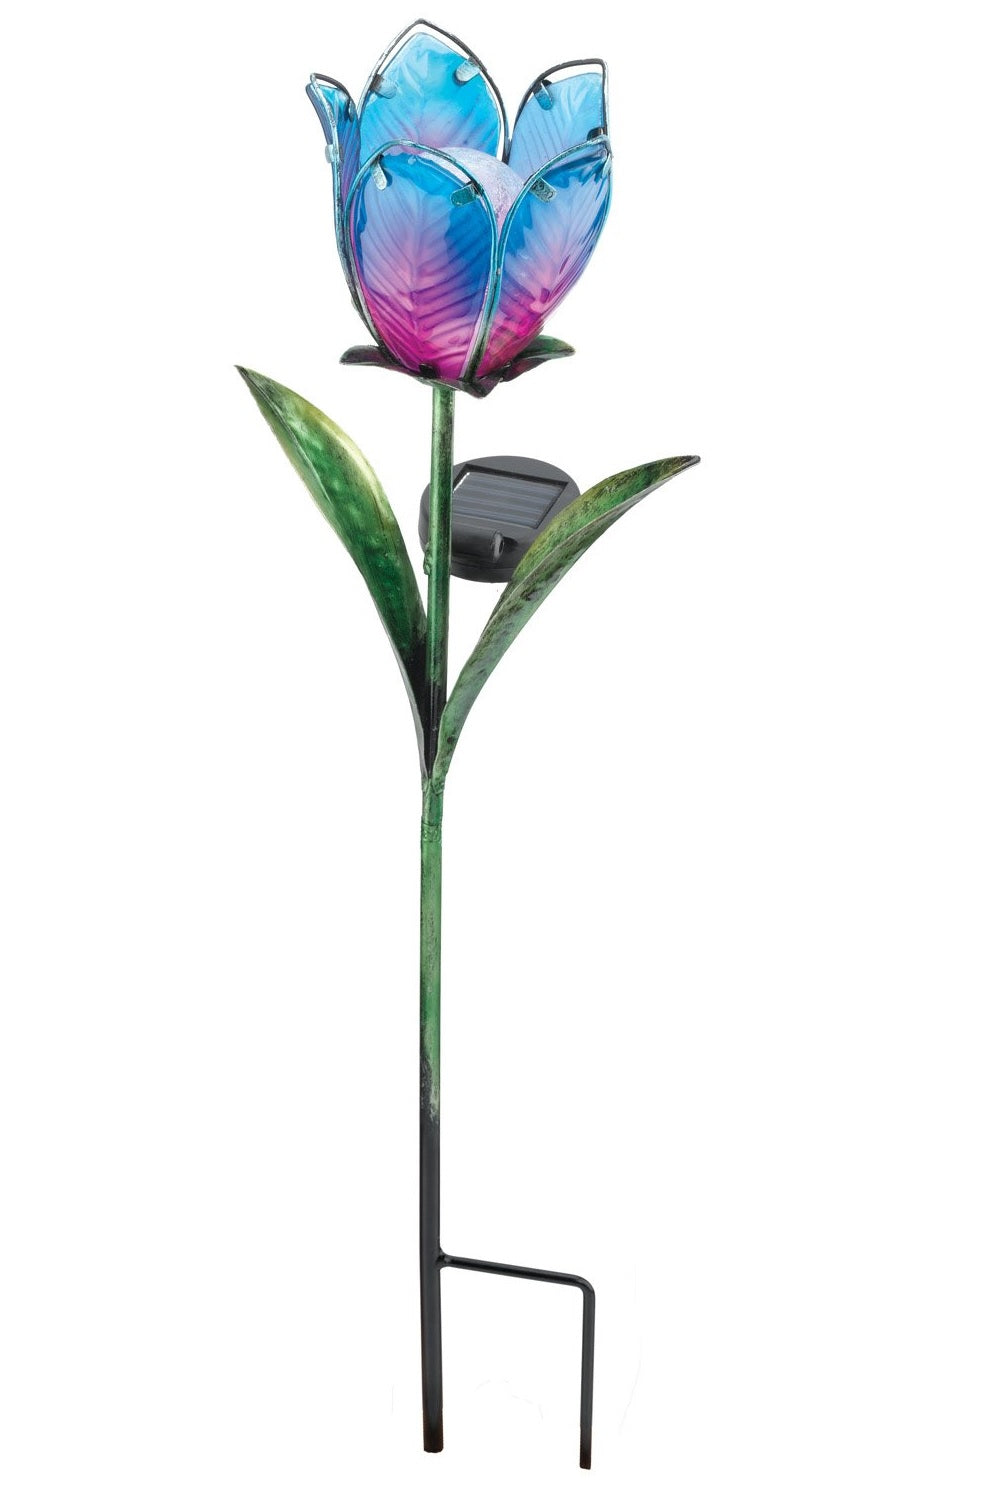 Regal Art & Gift 10558 Solar Tulip Garden Stake, 23.75"